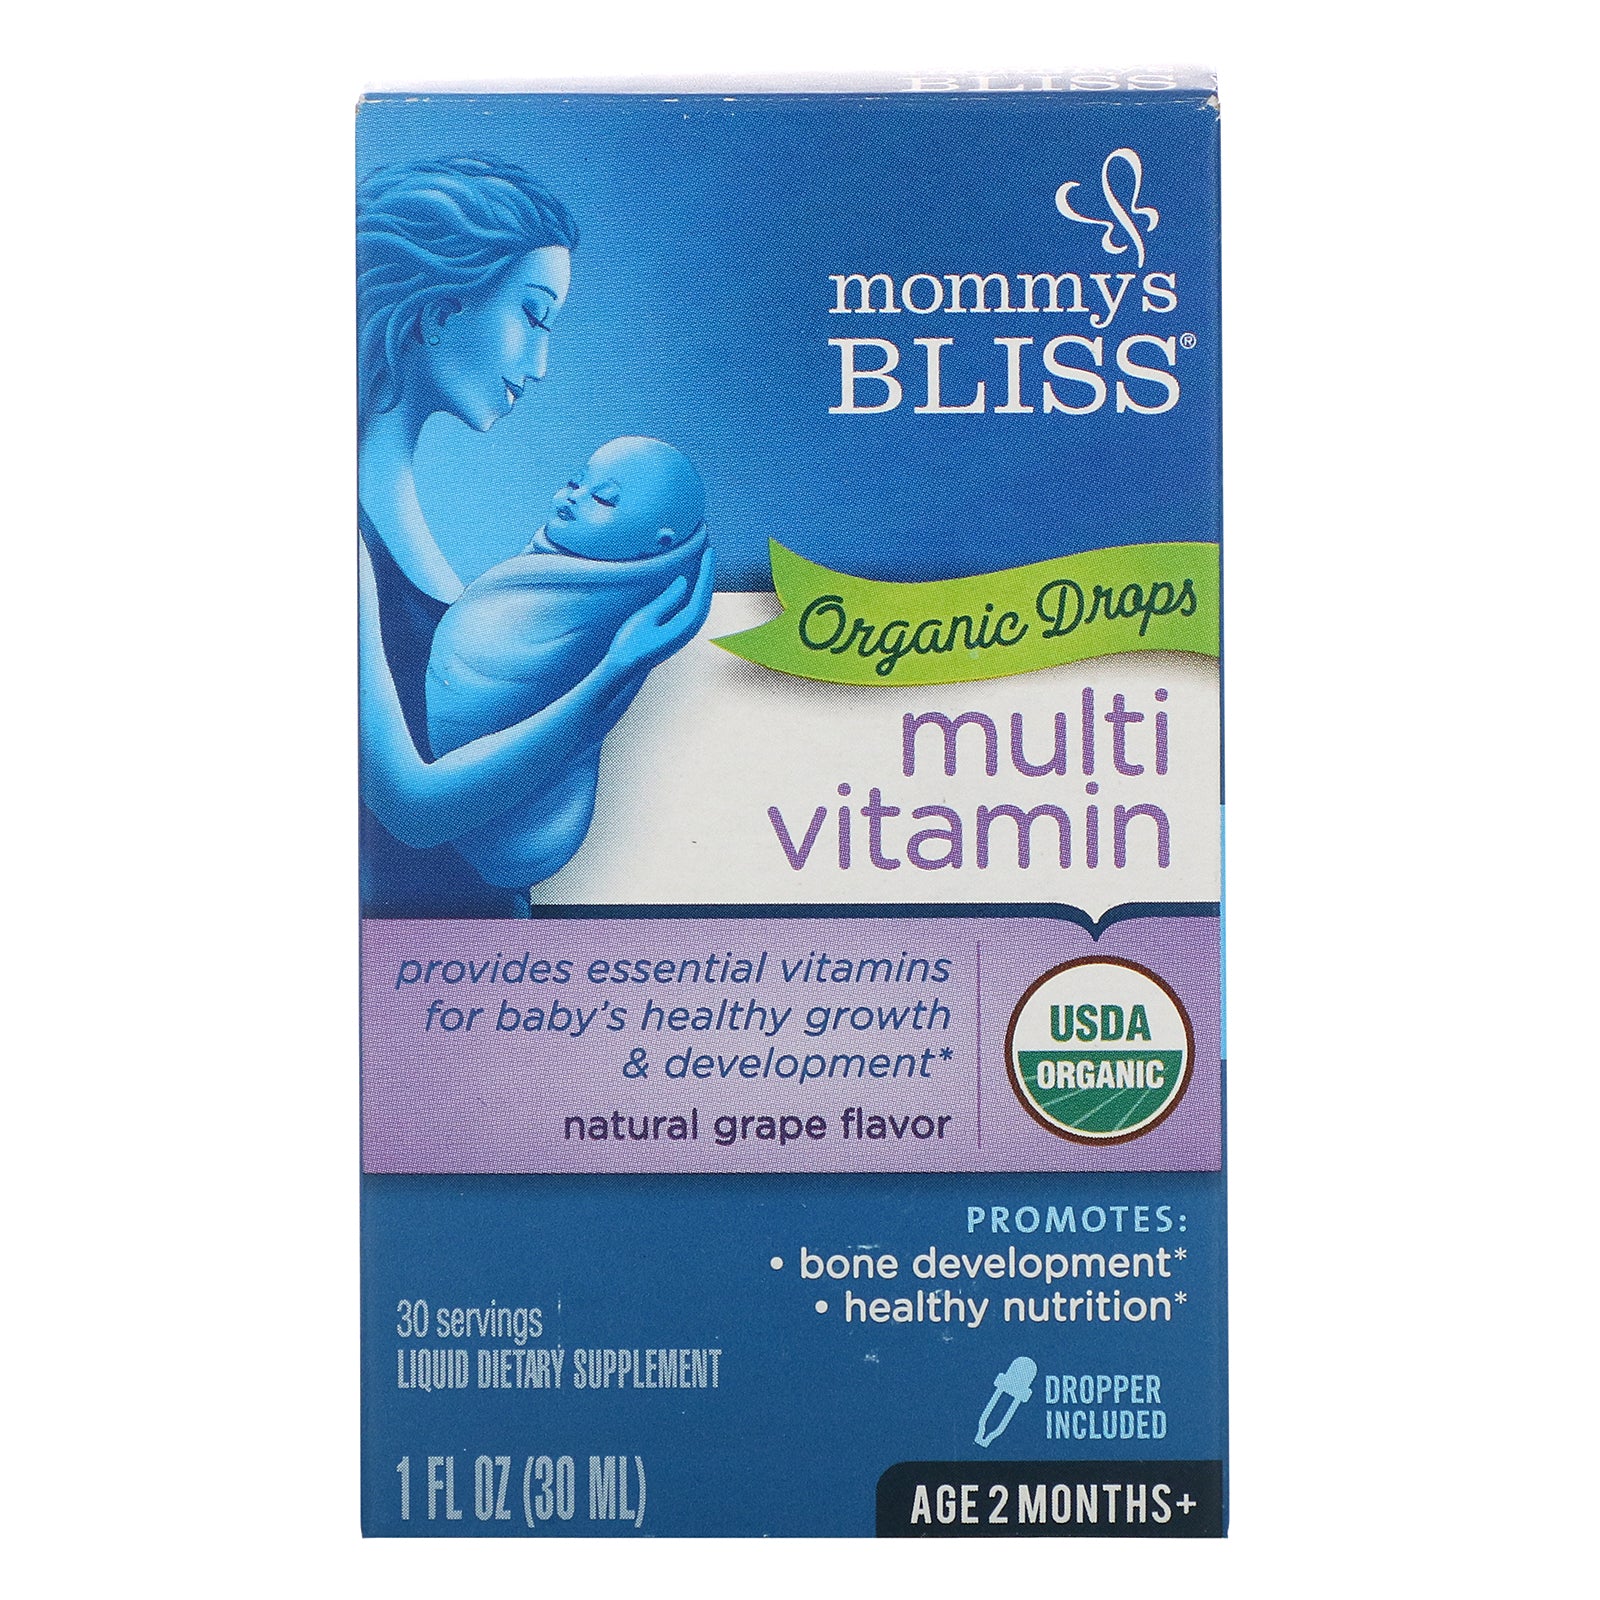 Mommy's Bliss, Multivitamin, Organic Drops, 2 Months+, Natural Grape Flavor , 1 fl oz (30 ml)